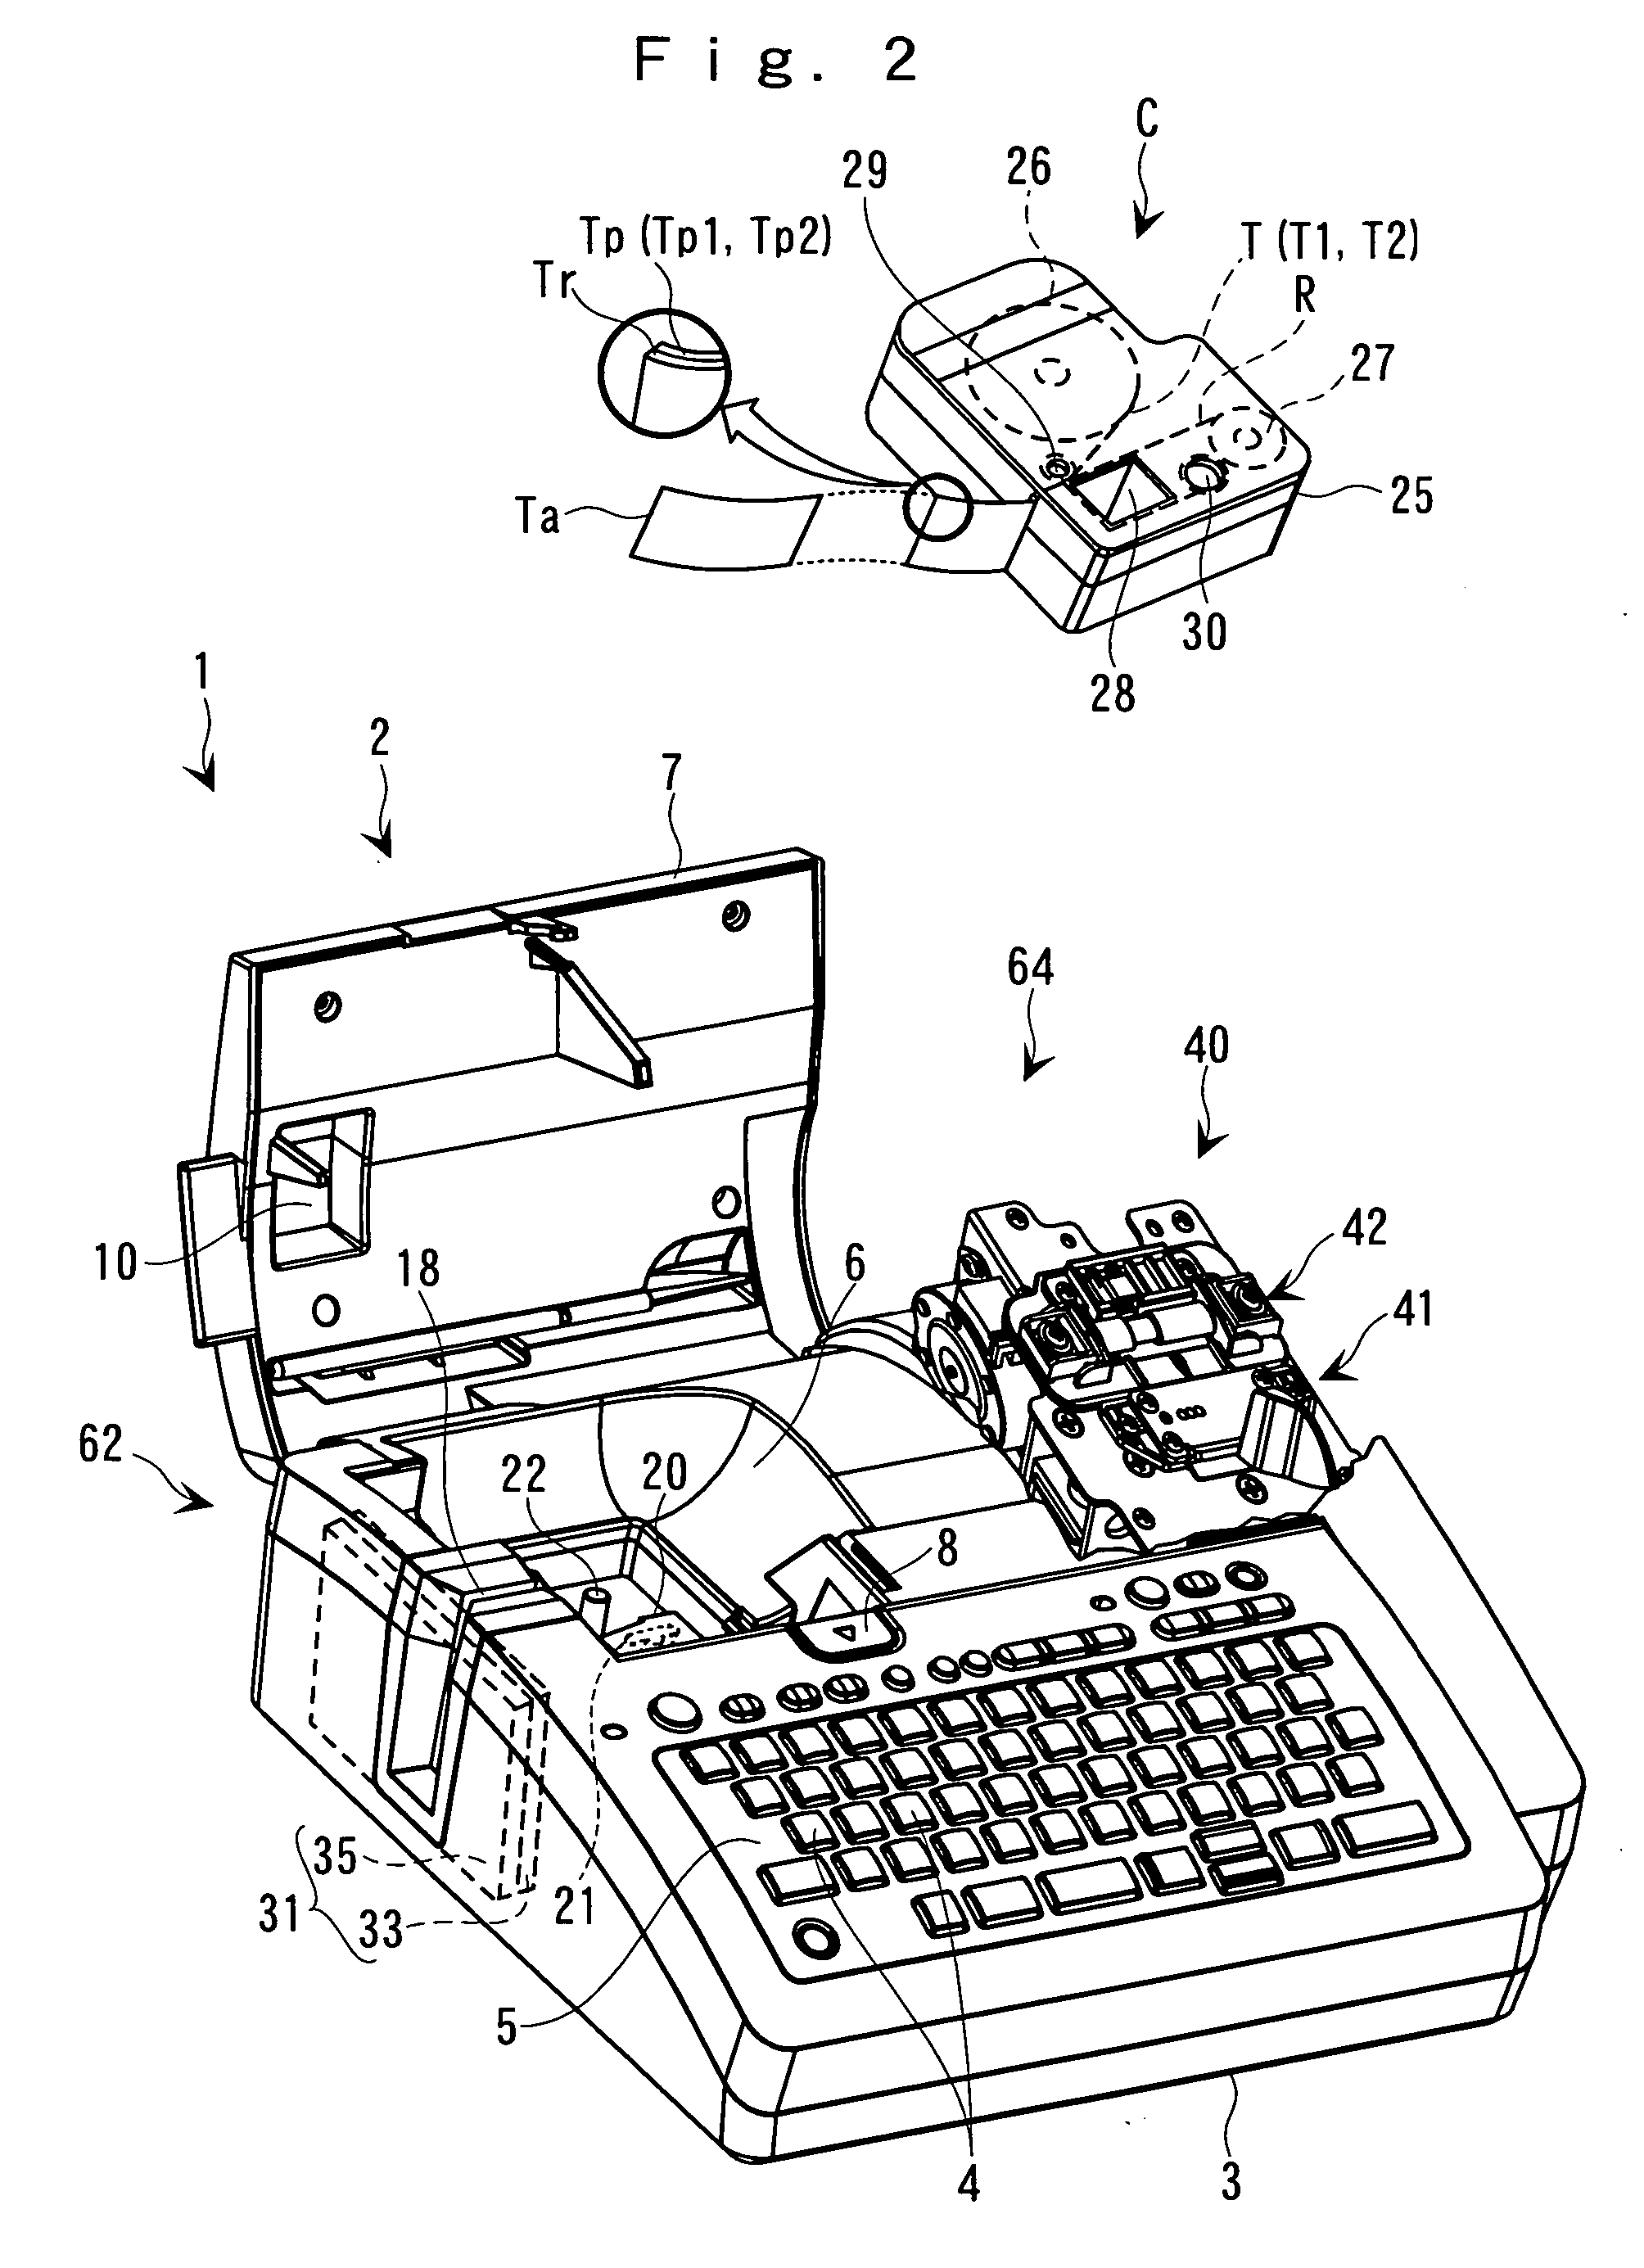 Tape processing apparatus, method of conducting demonstration with tape processing apparatus, and program